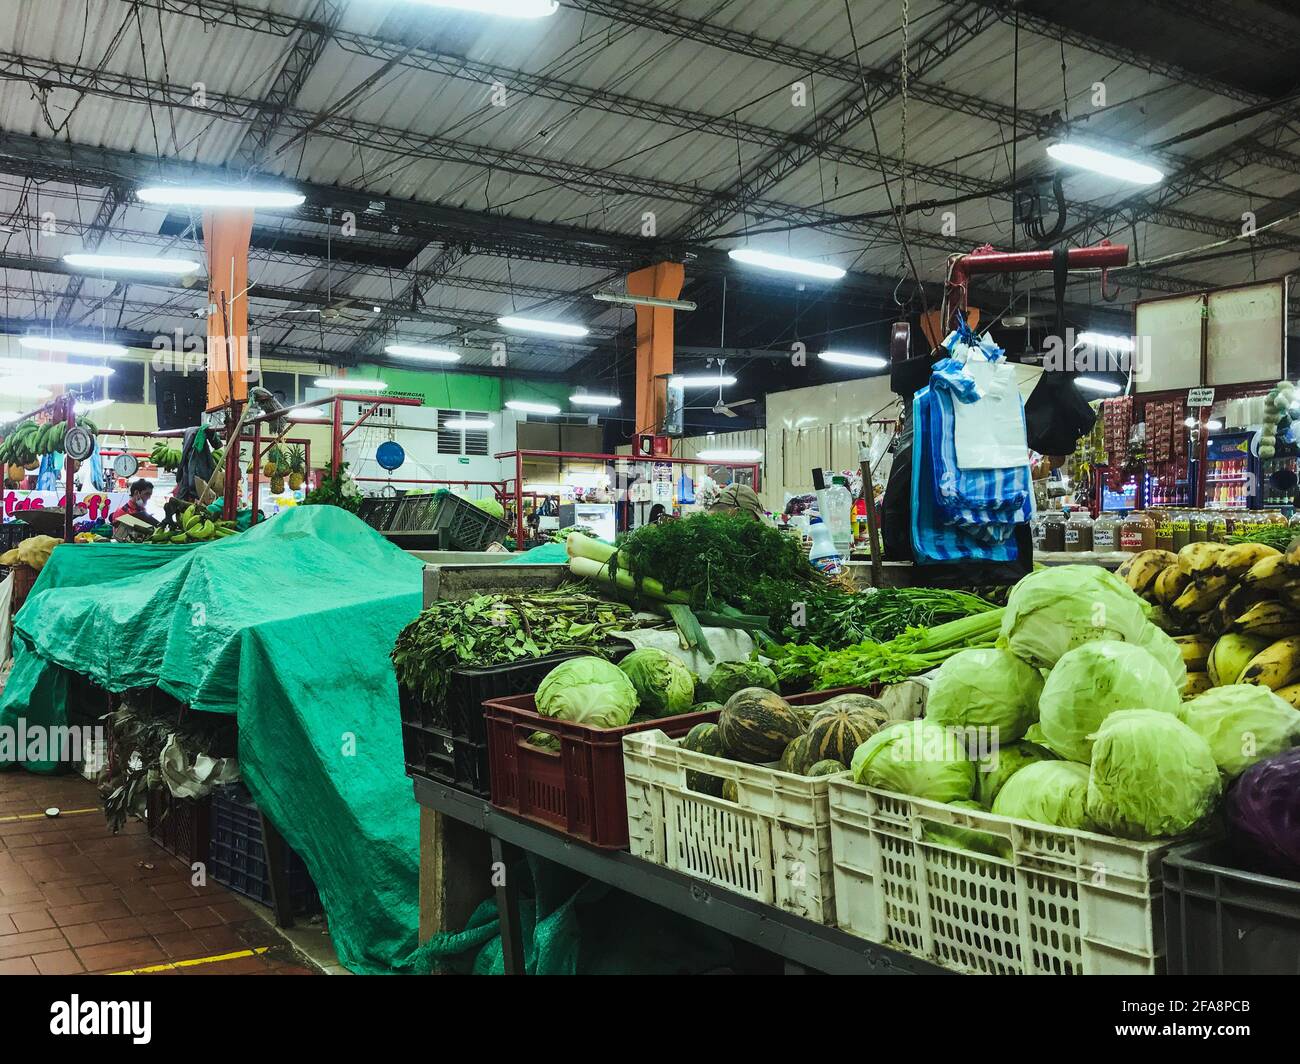 BUCARAMANGA, COLOMBIA - Apr 20, 2021: Wide angle shot of a Farmer’s marketplace located in Bucaramanga Colombia Stock Photo